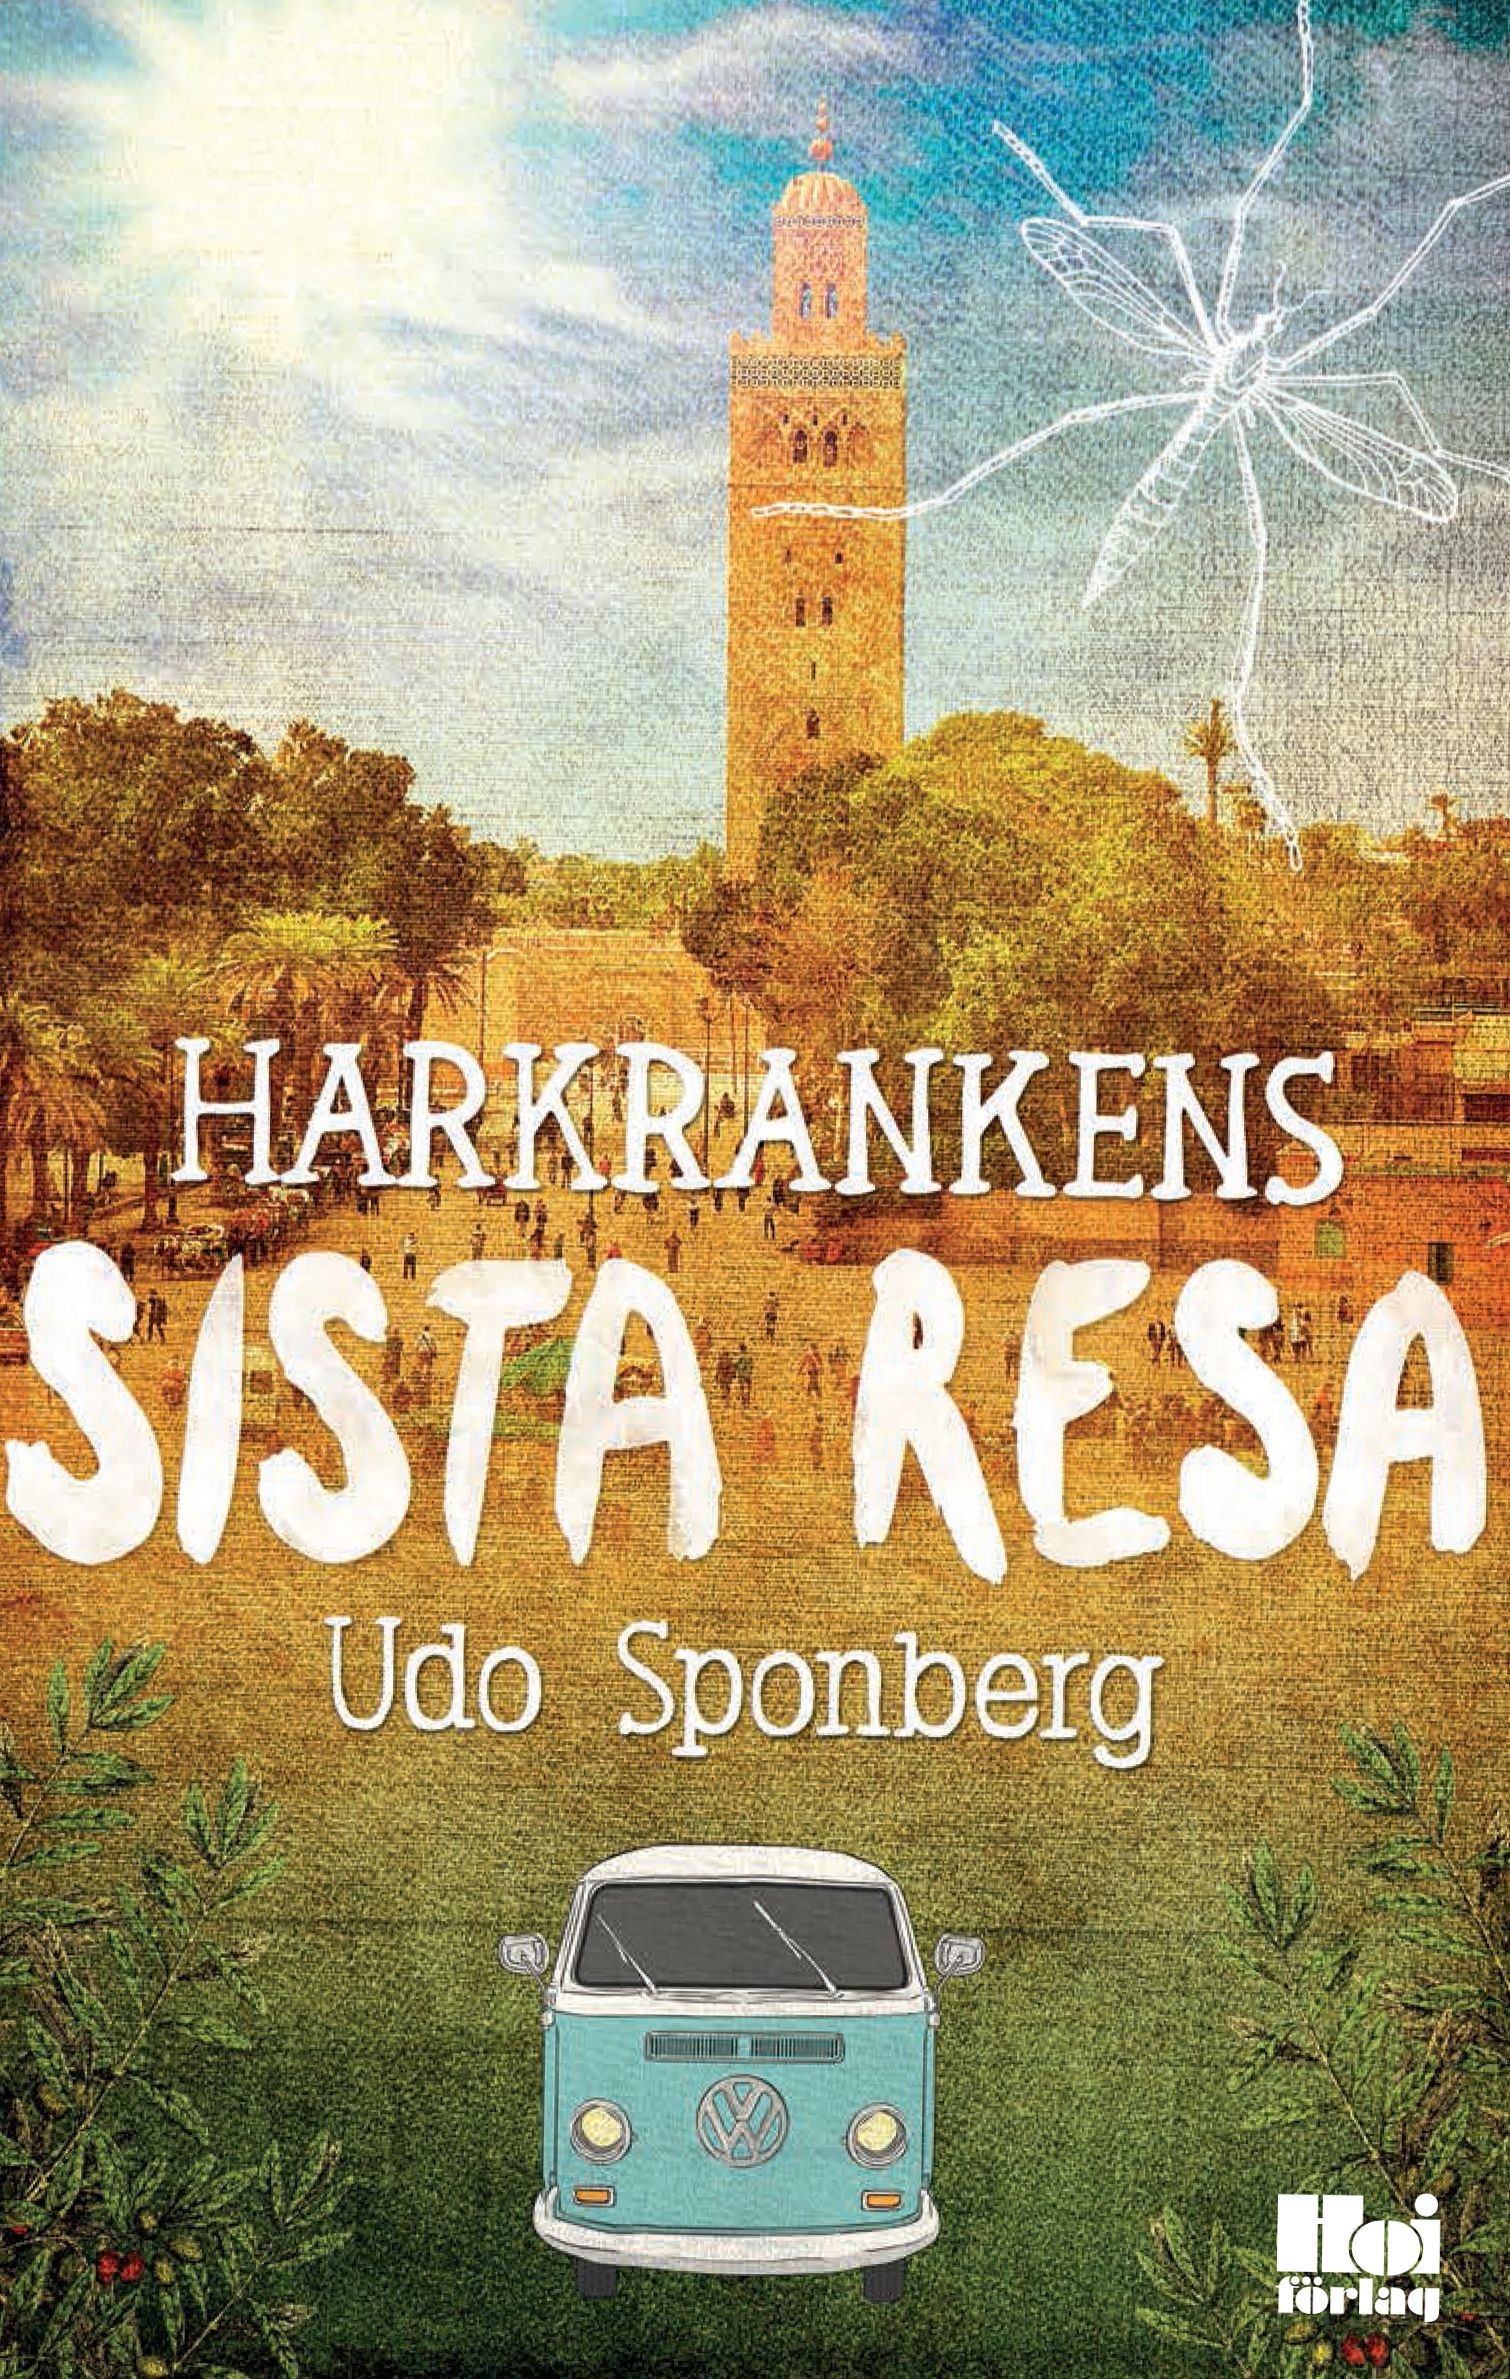 Harkrankens sista resa, eBook by Udo Sponberg